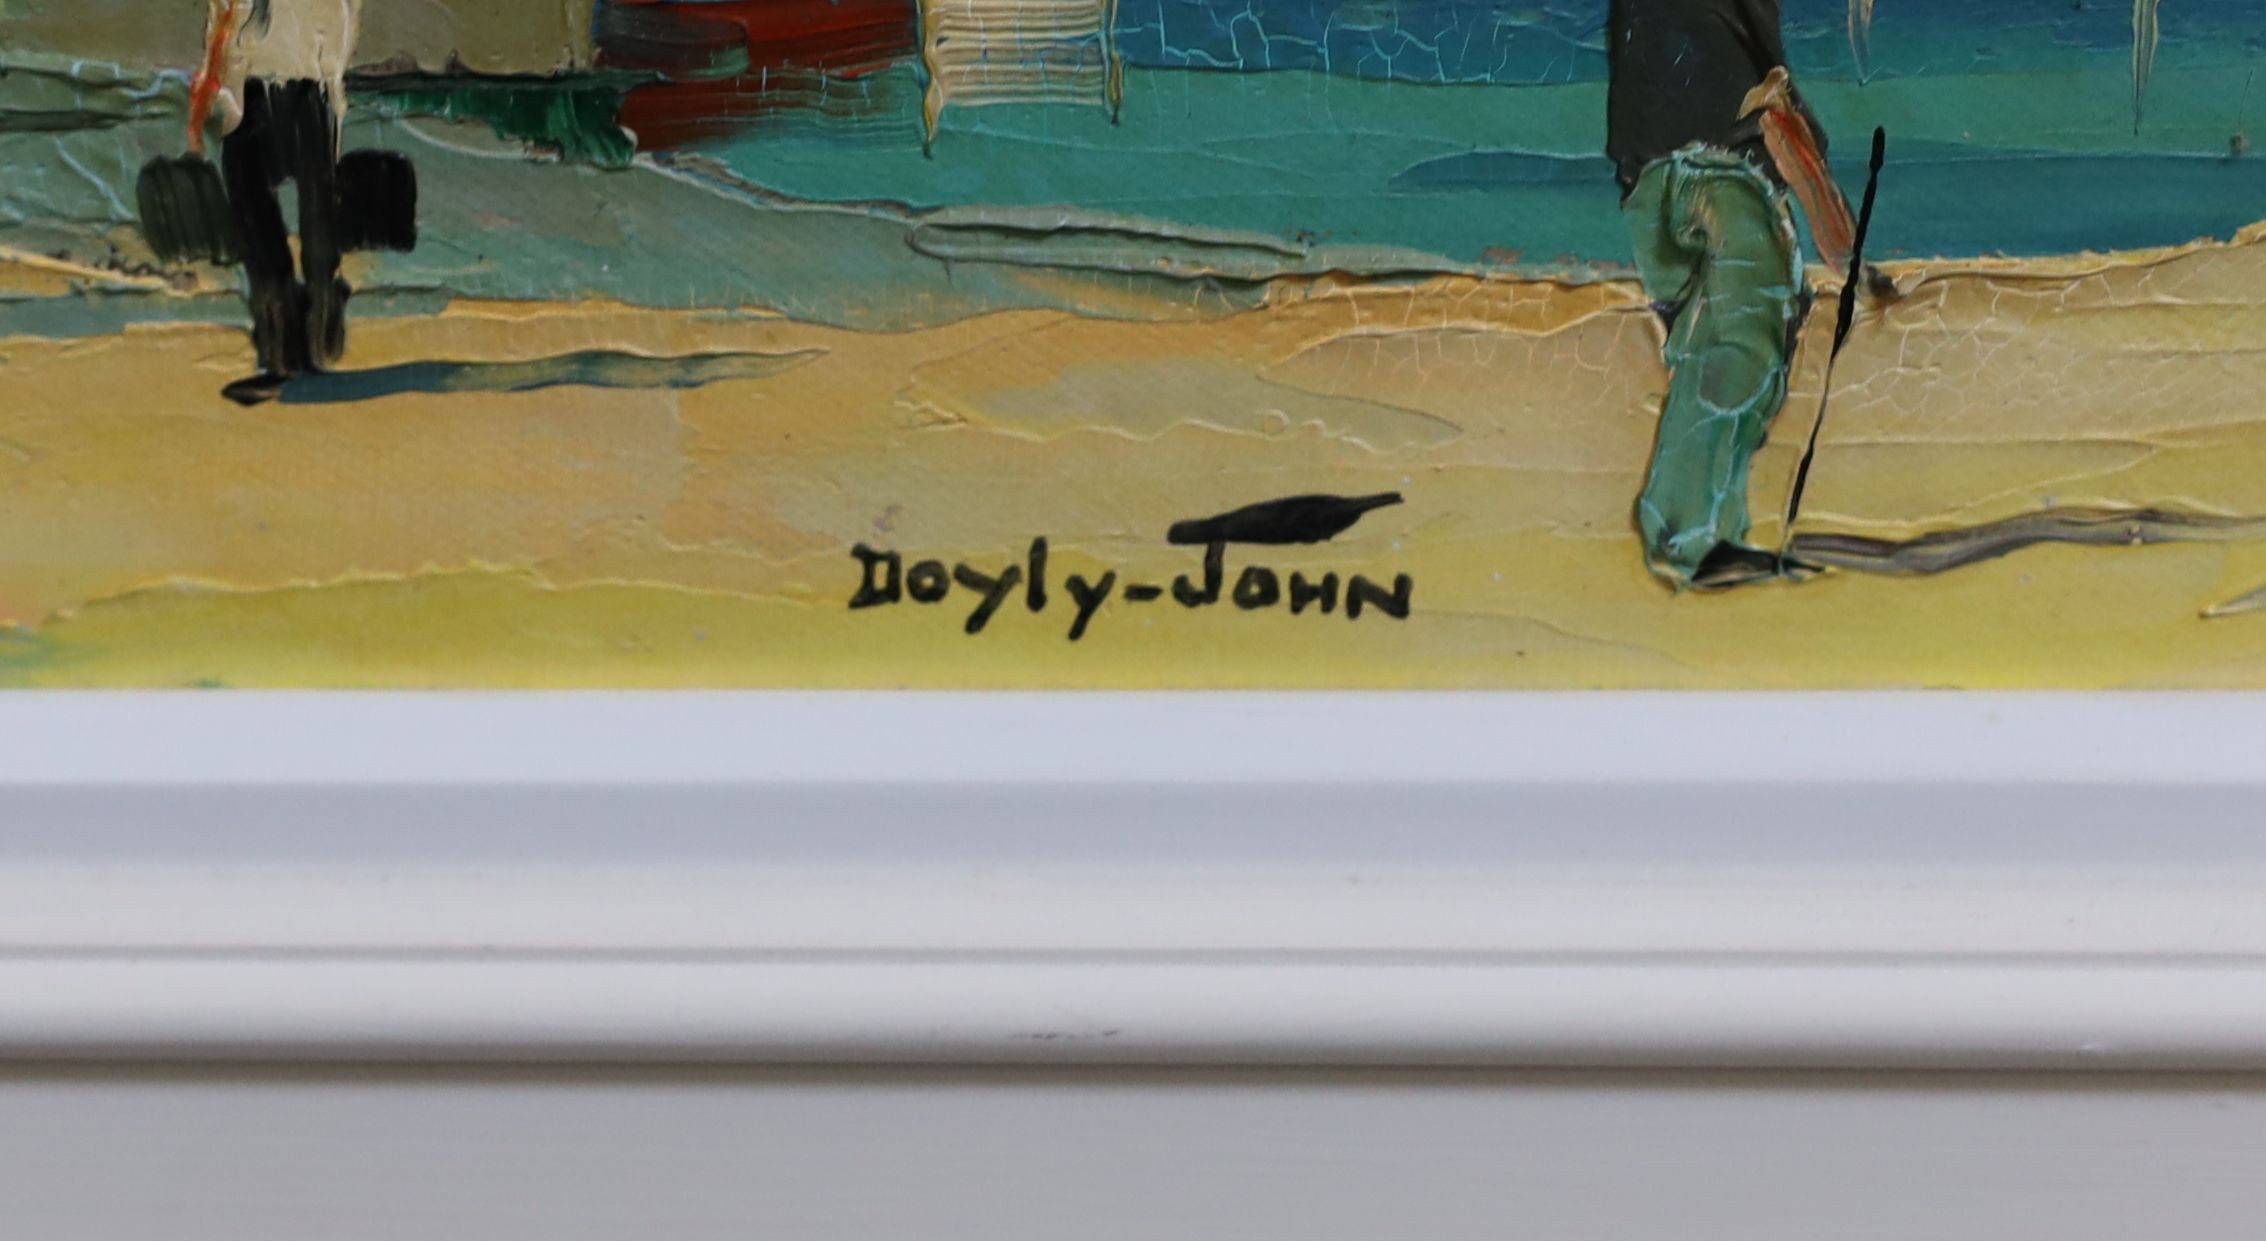 Cecil Rochfort Doyly-John (1906-1993), On the Mediterranean coast, oil on canvas, 30 x 50cm